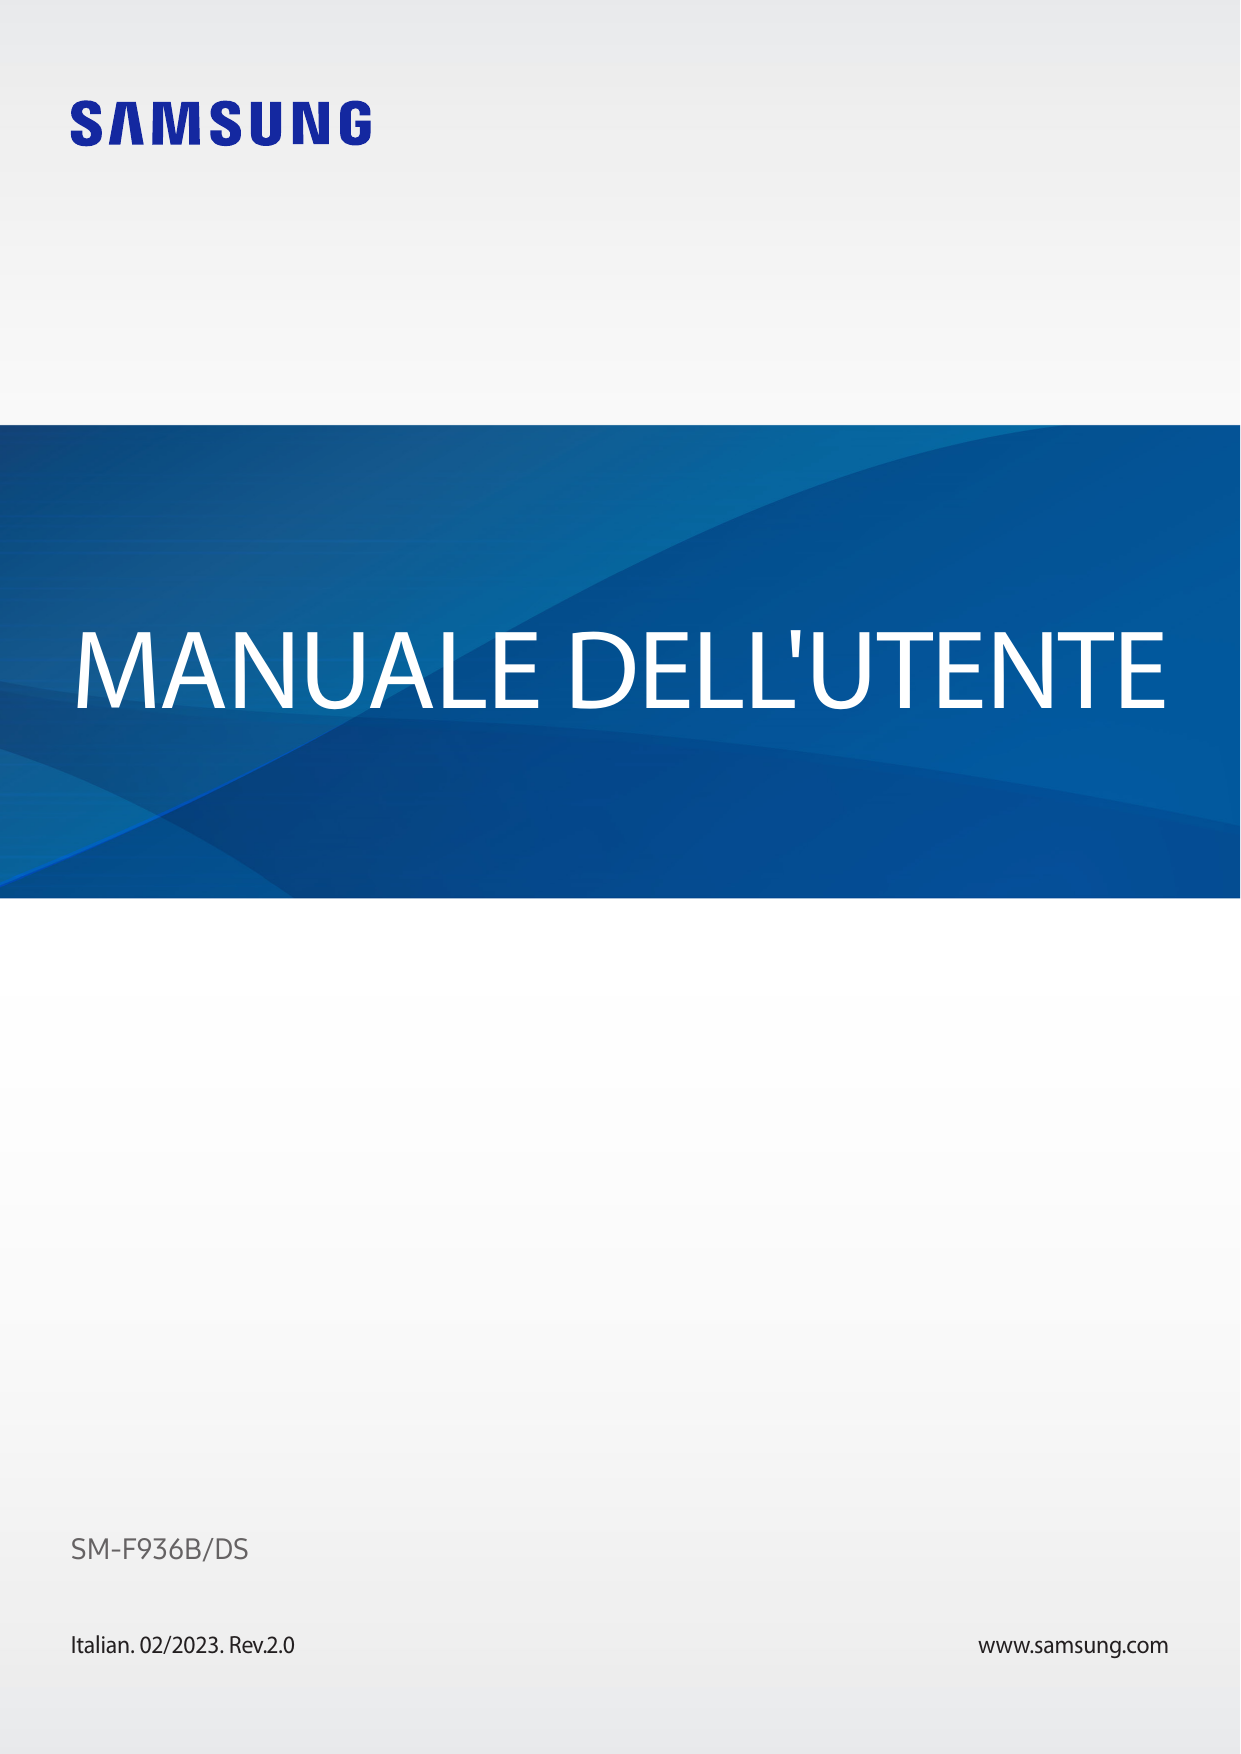 MANUALE DELL'UTENTESM-F936B/DSItalian. 02/2023. Rev.2.0www.samsung.com